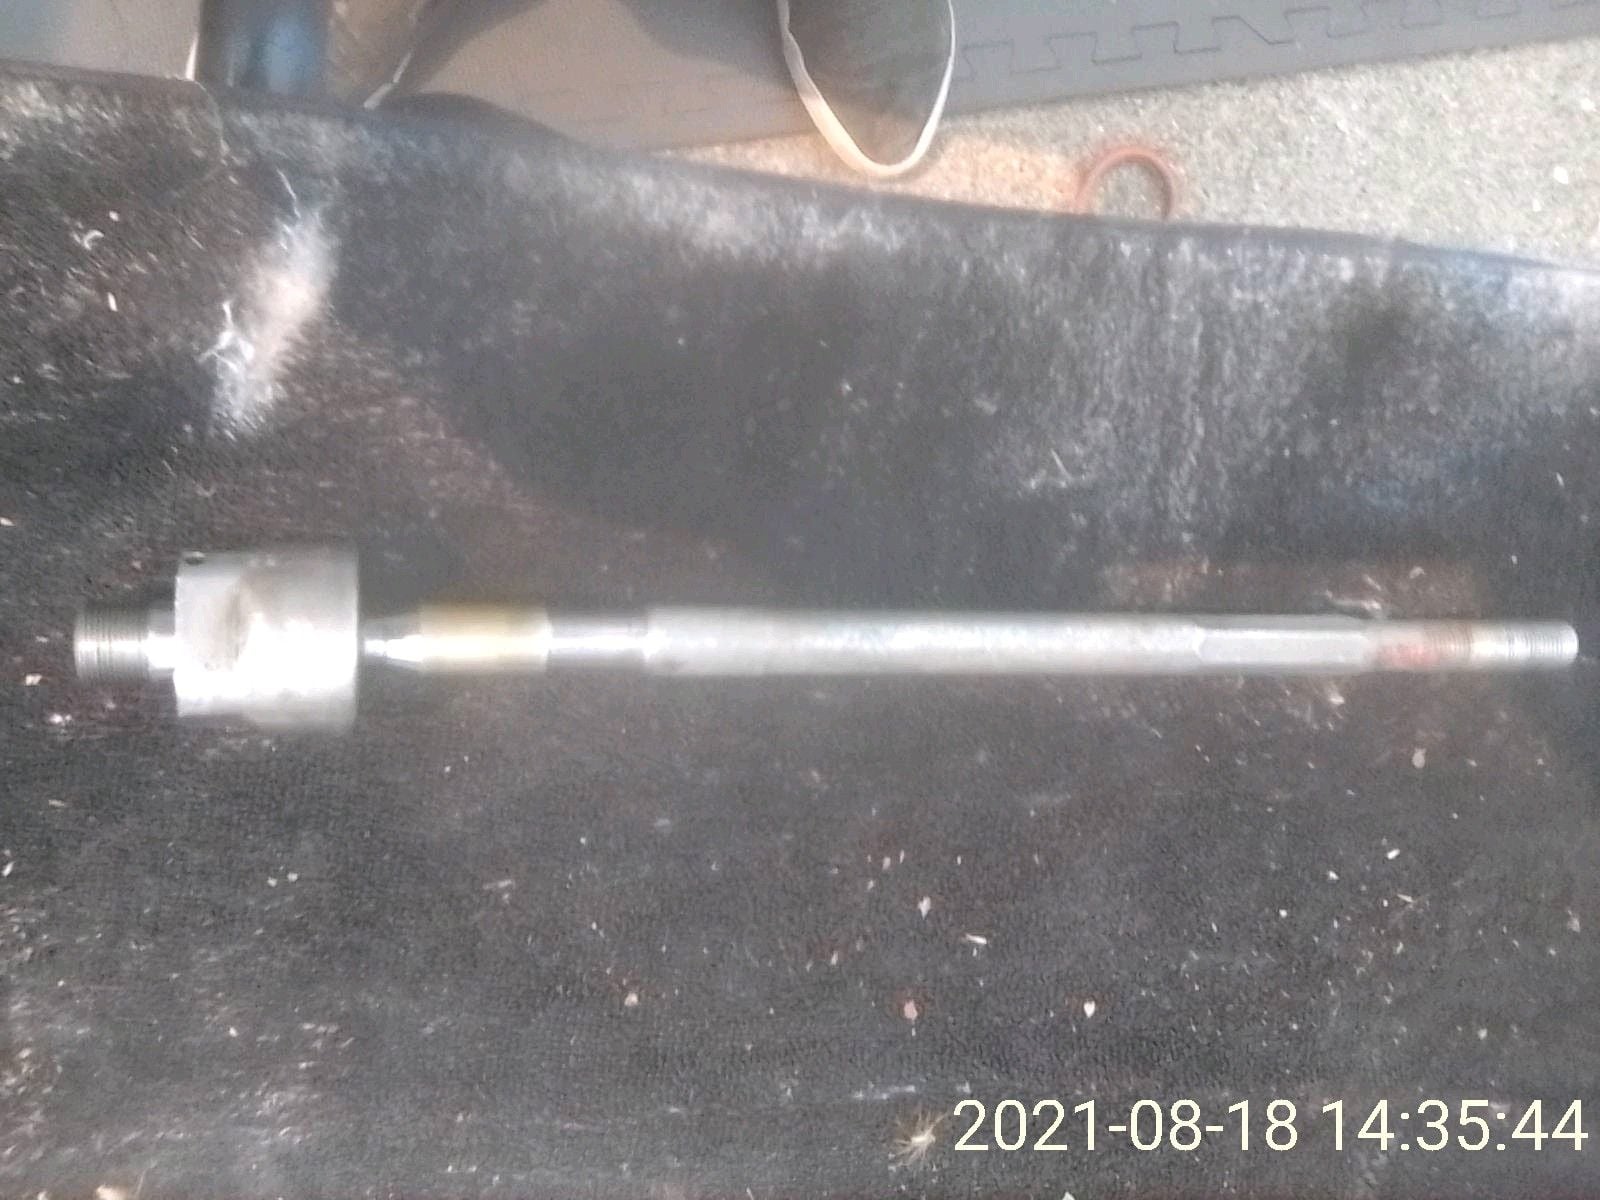 Steering/Suspension - FD - OEM Inner Tie Rod - New - 1993 to 2002 Mazda RX-7 - San Jose, CA 95121, United States